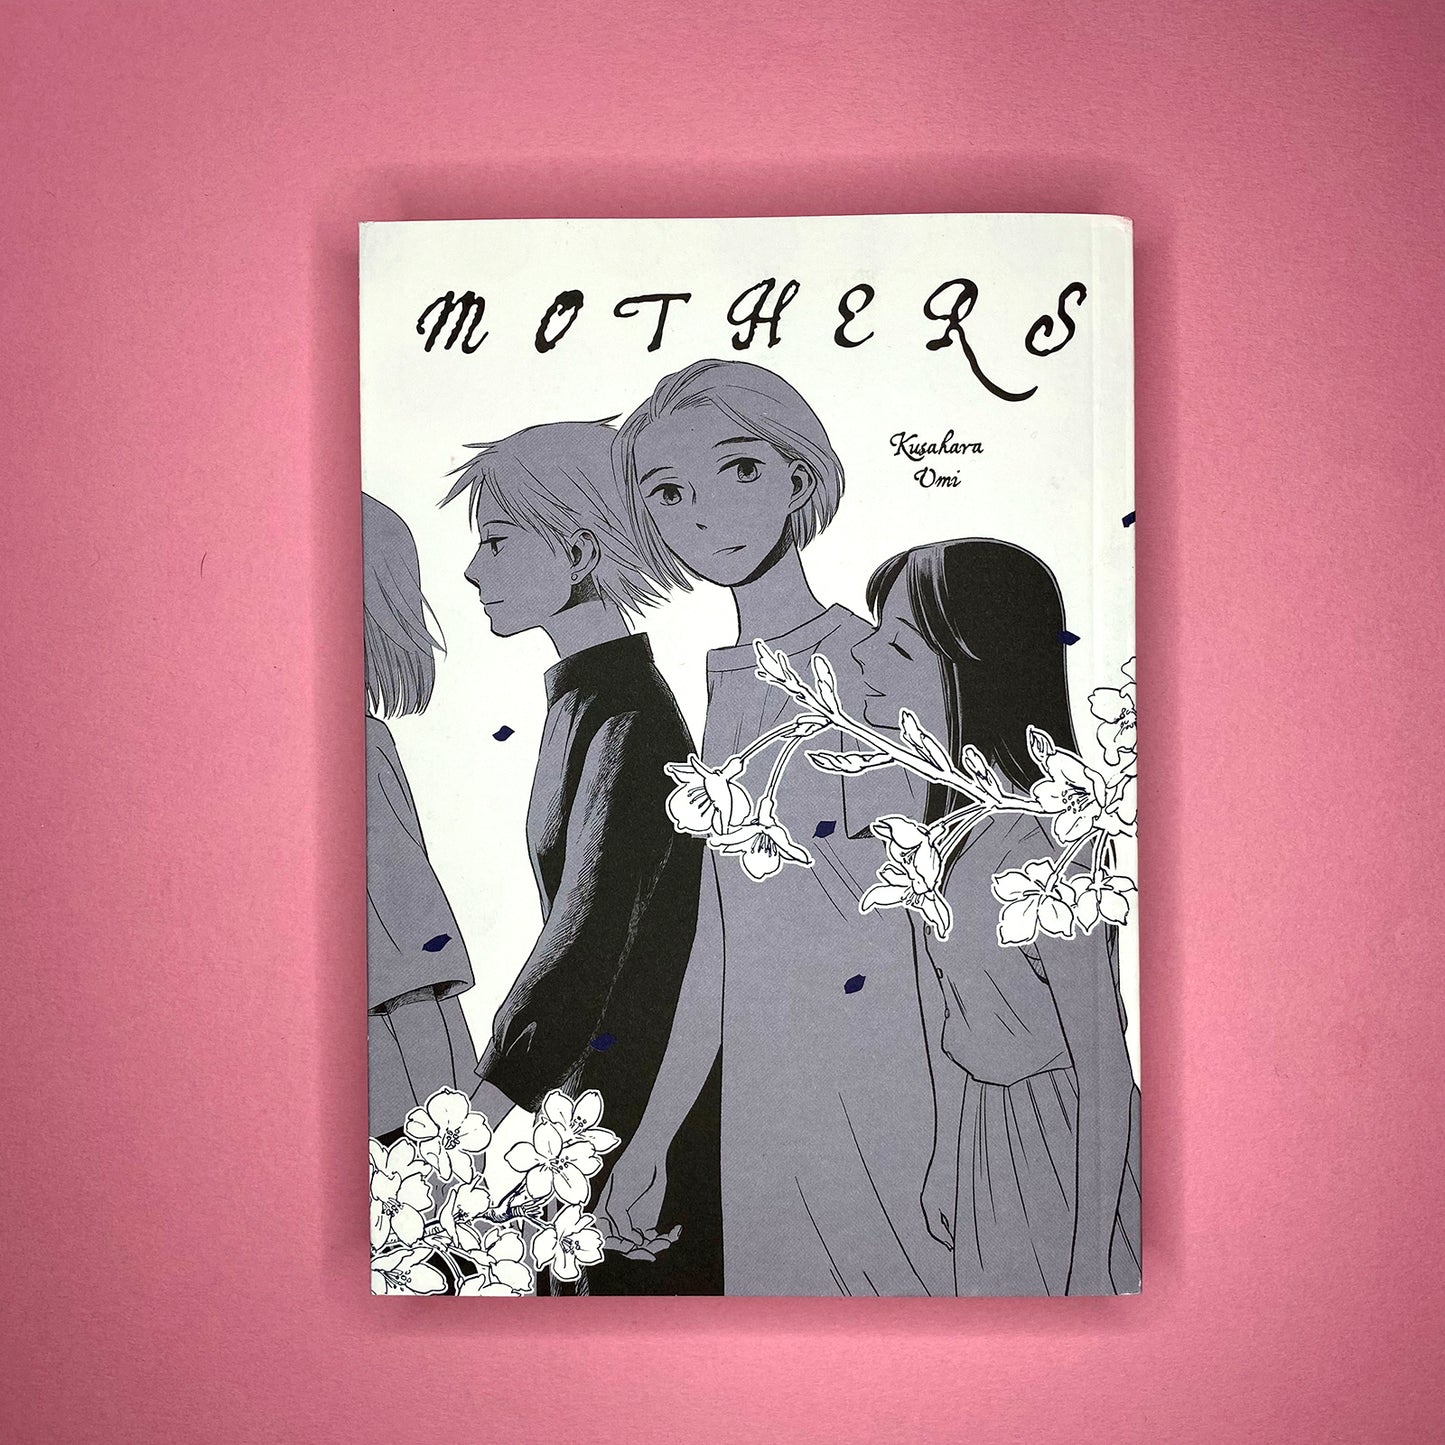 Mothers - by Umi Kusahara